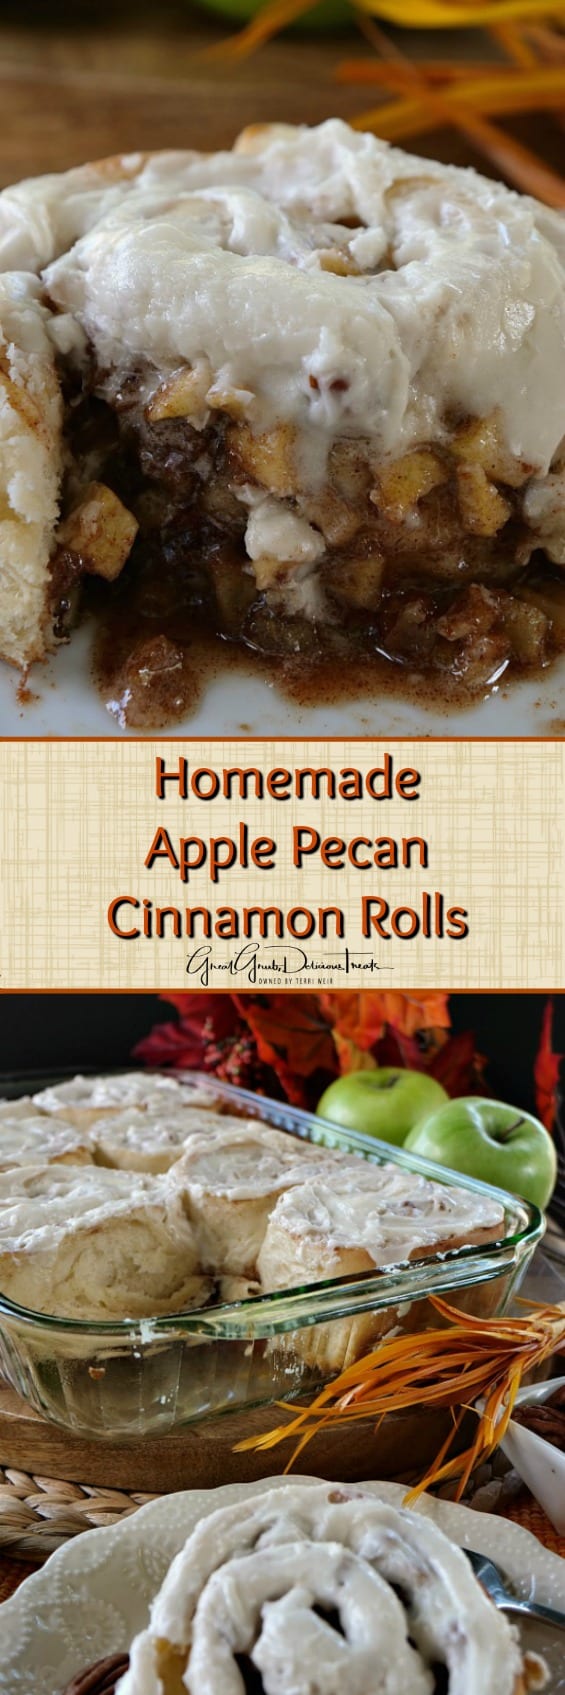 Homemade Apple Pecan Cinnamon Rolls